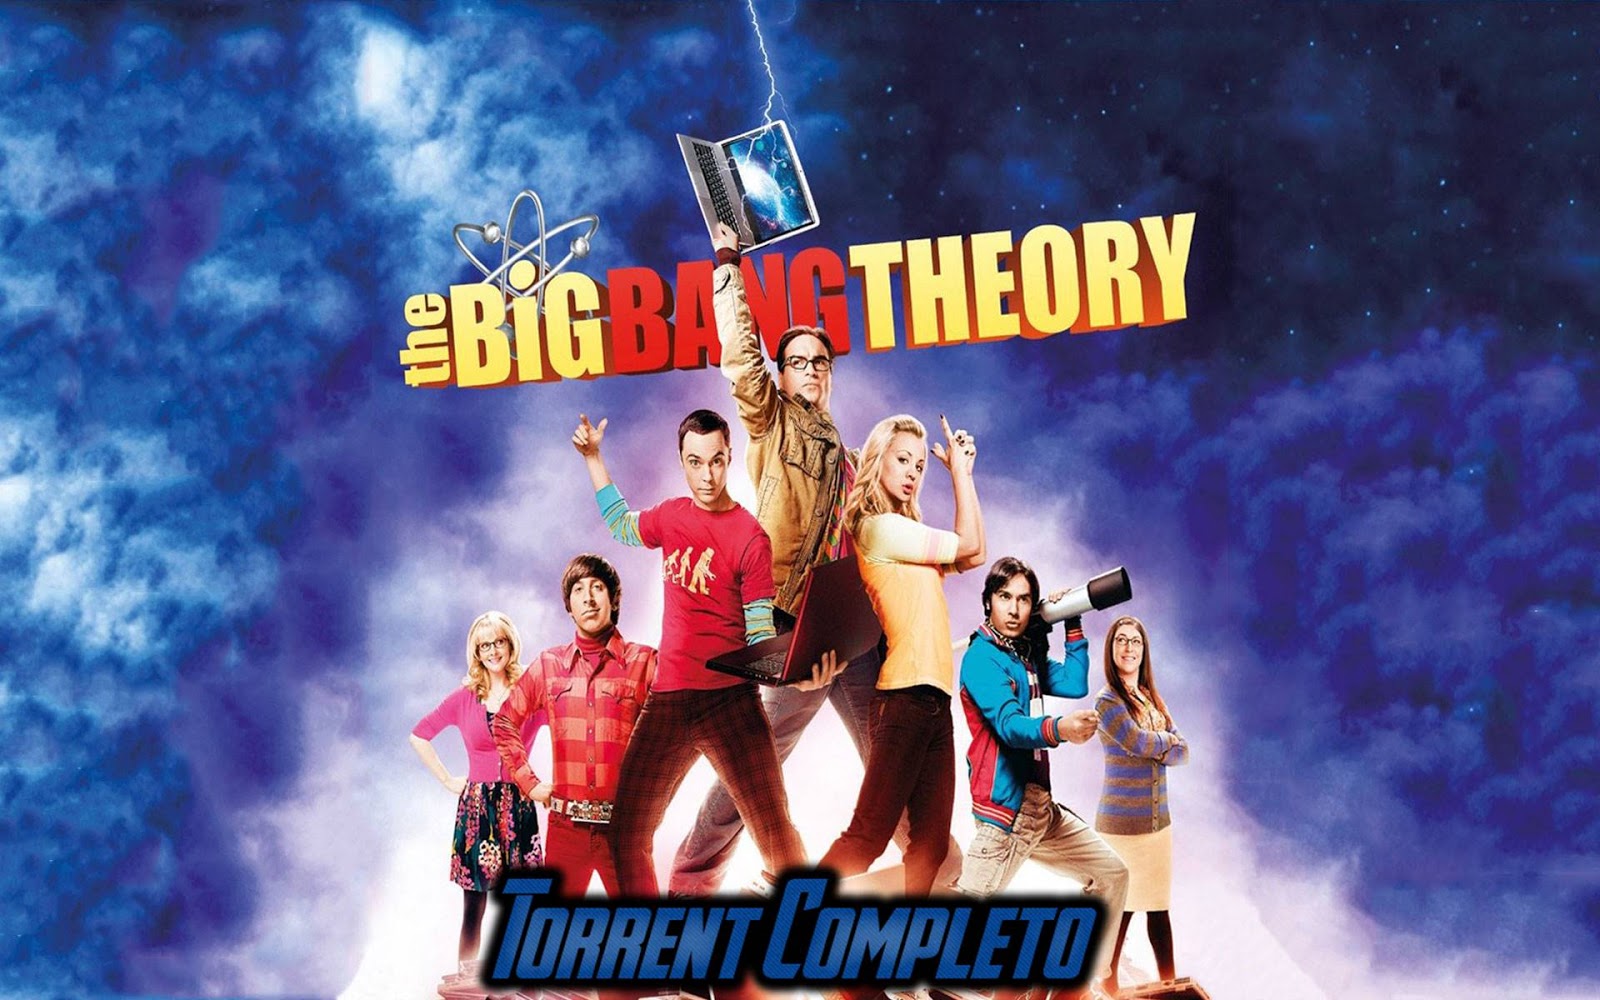 big bang theory season 8 download utorrent